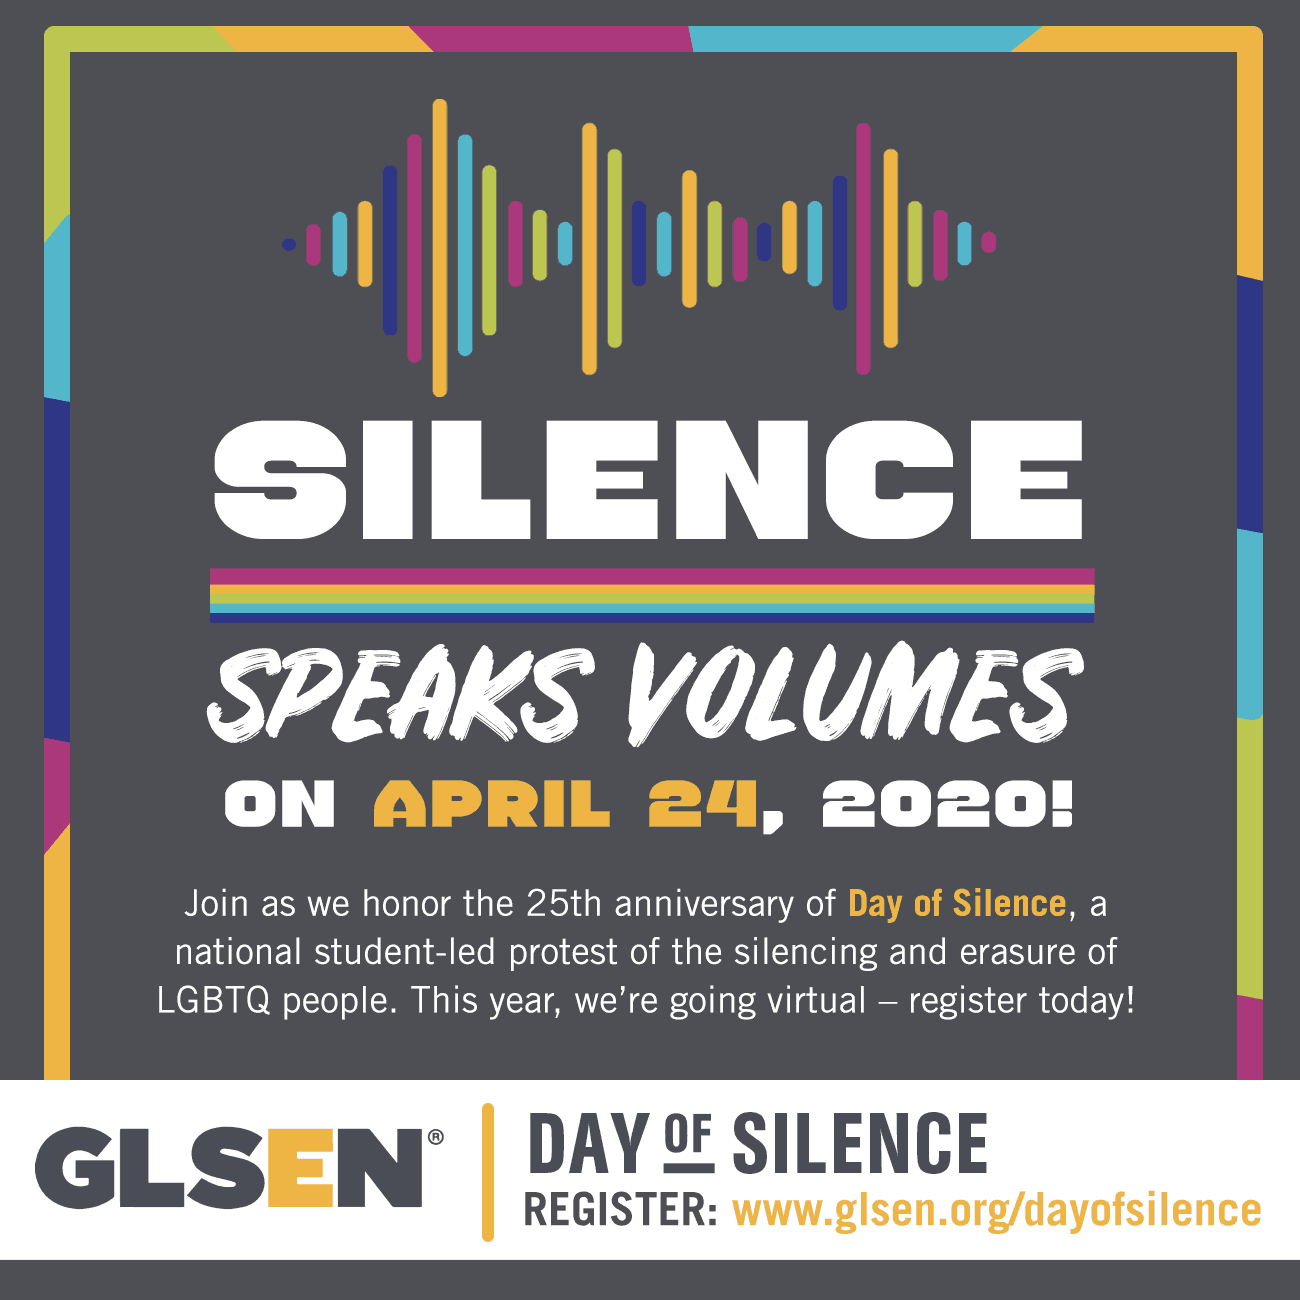 GLSEN'S Day of Silence to Speak Volumes Wesley Cullen Davidson